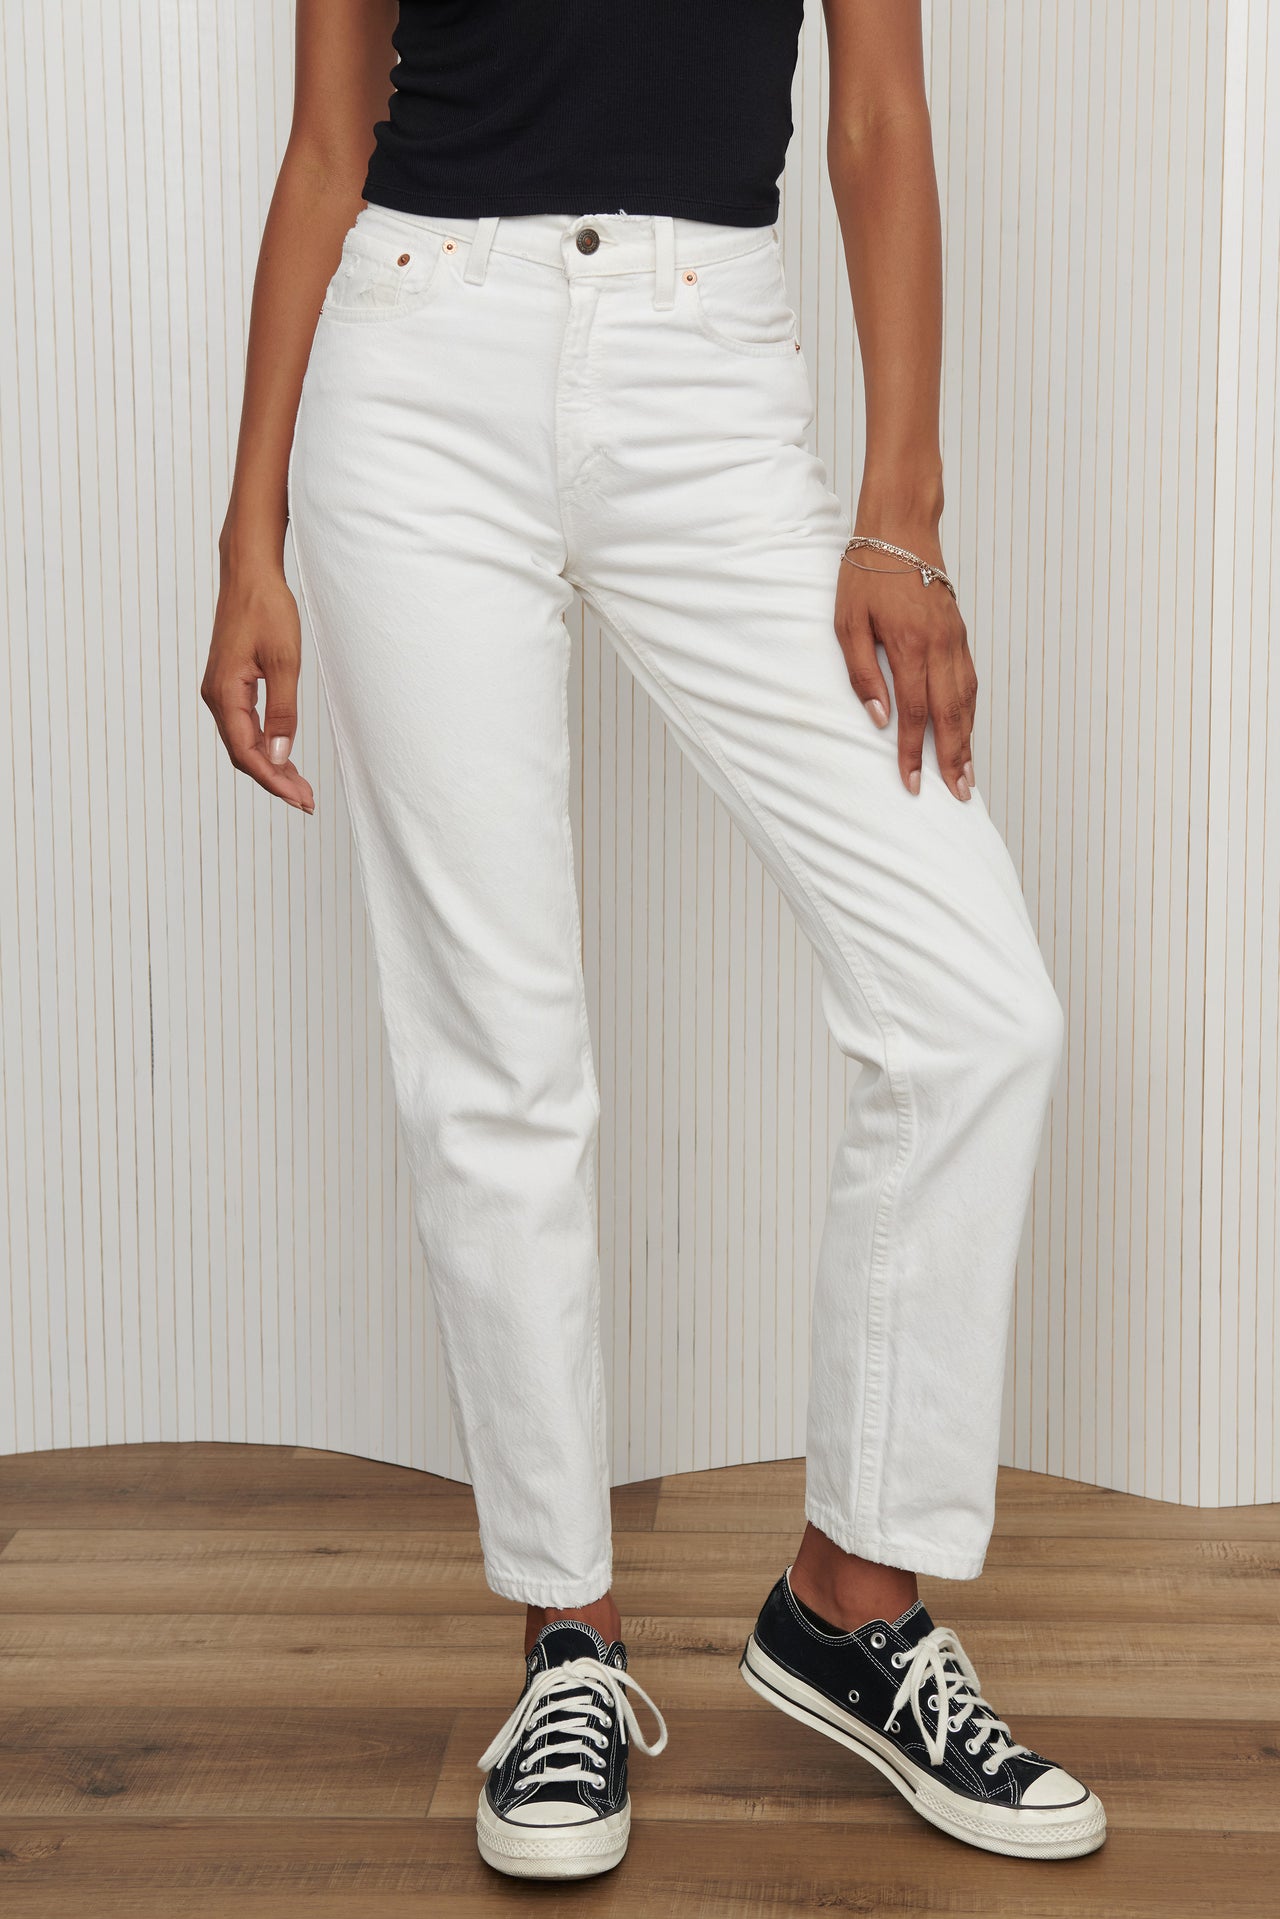 White Levi's 560 Denim Jeans SZ 25